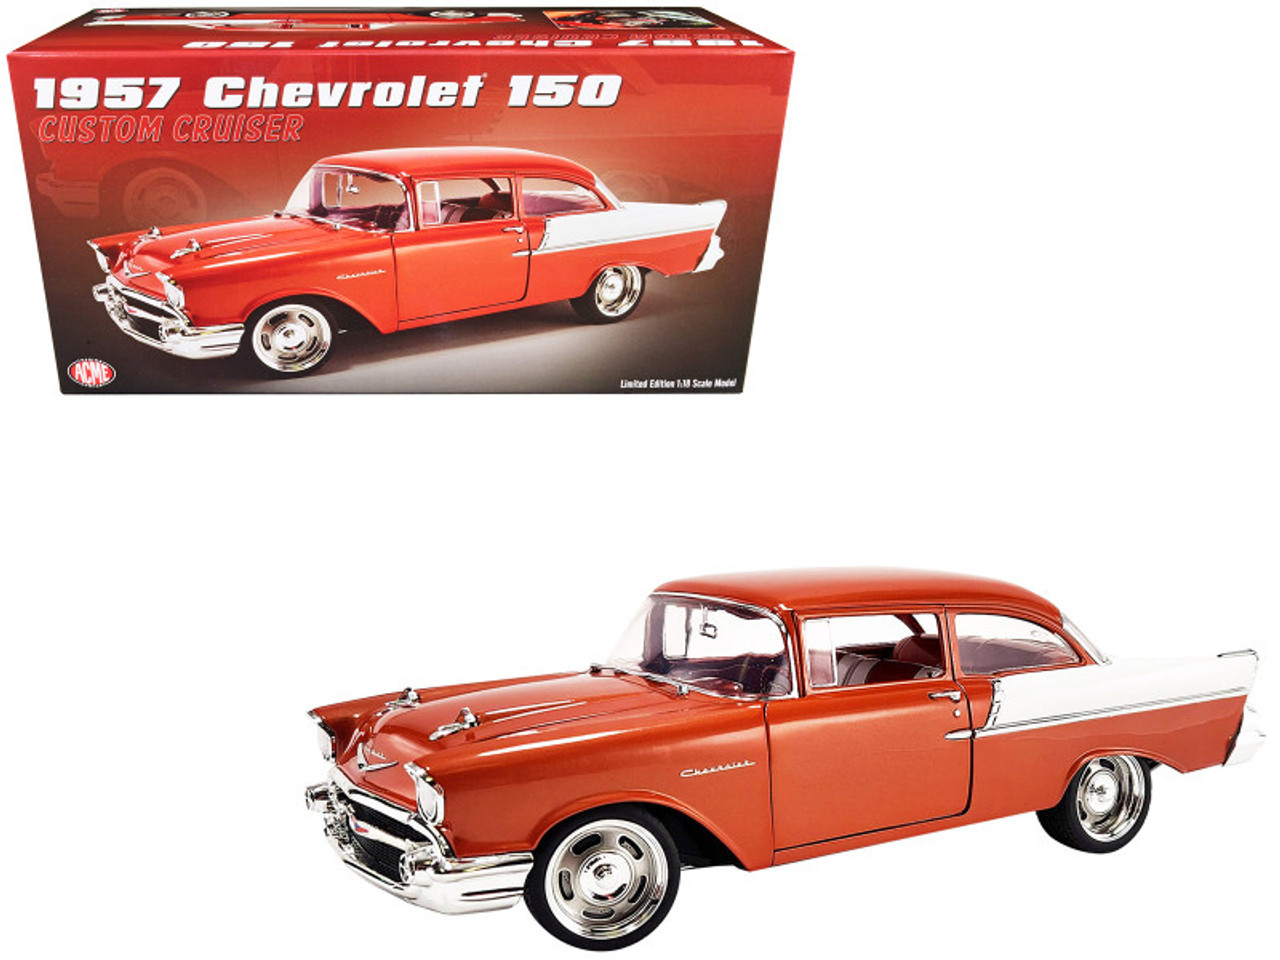 1/18 ACME 1957 Chevrolet 150 Custom Cruiser (Orange Red) Diecast Car Model Limited